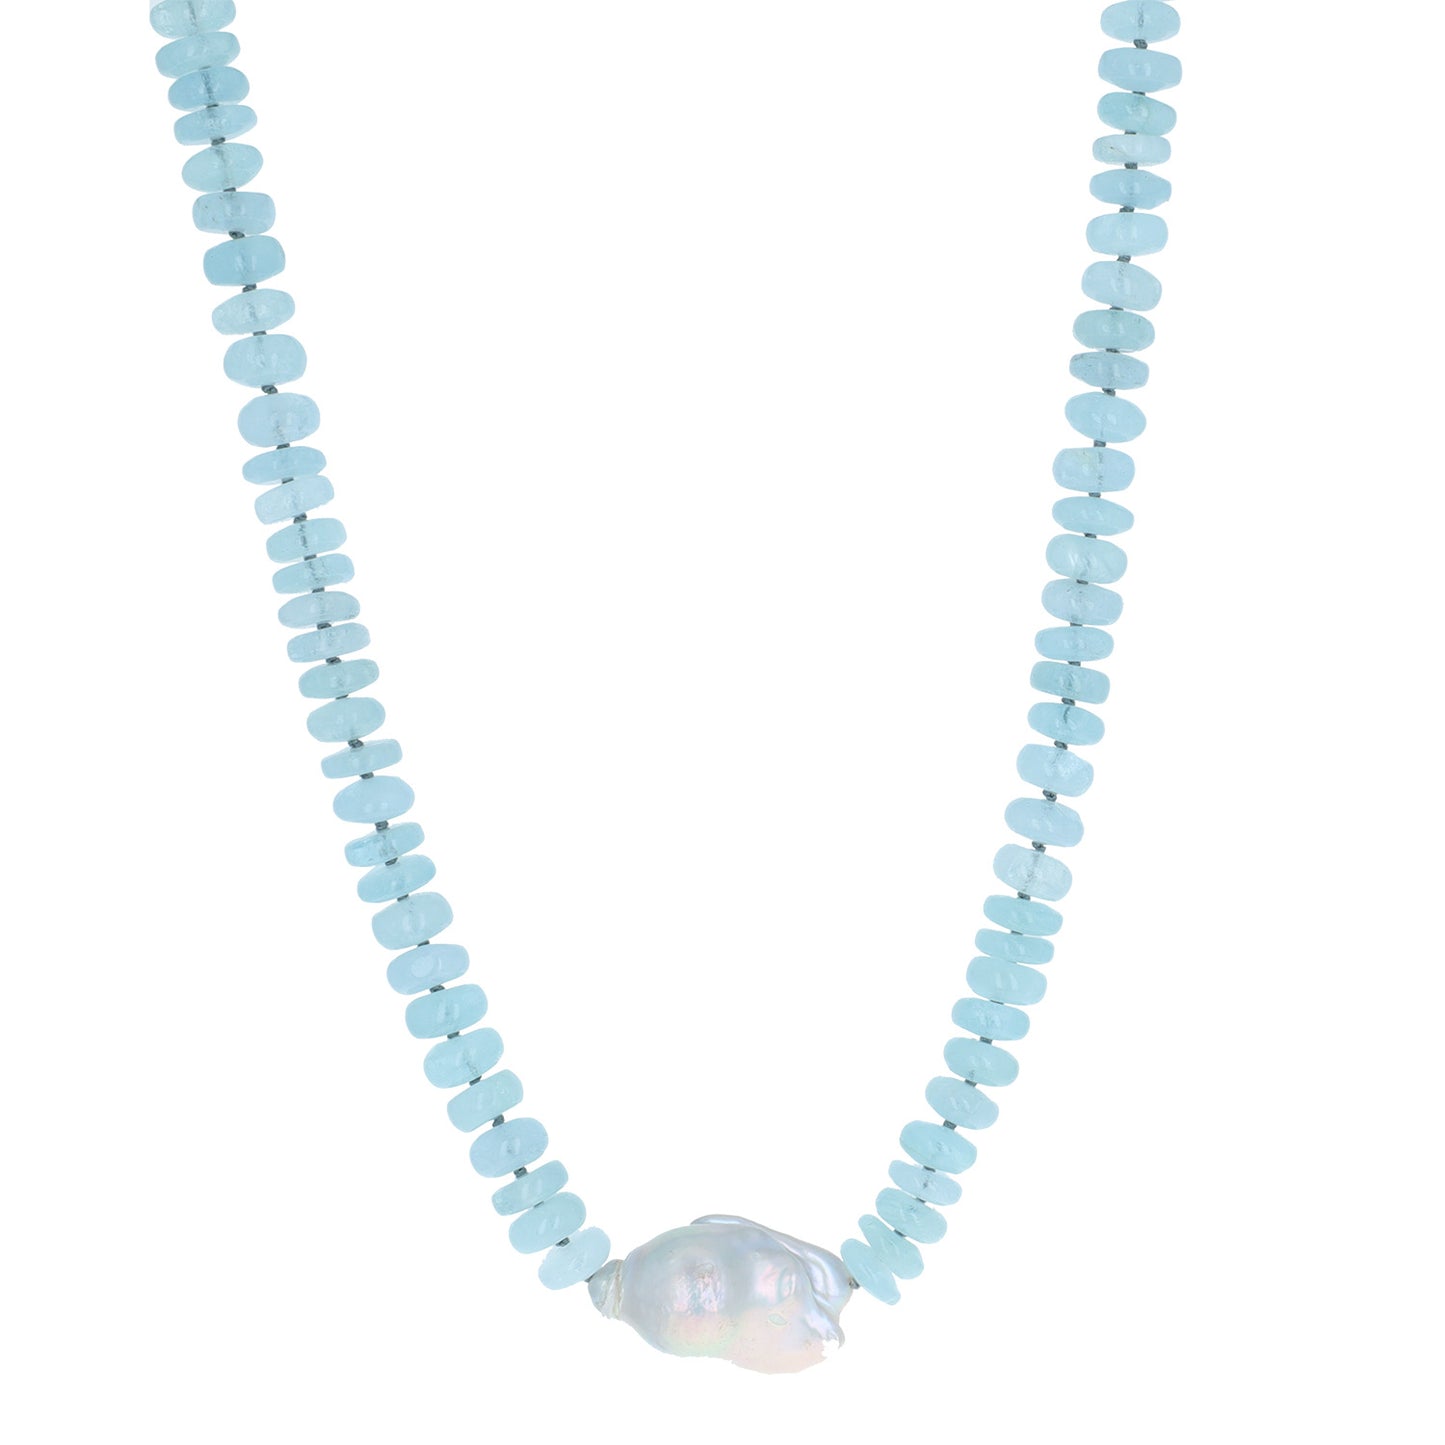 Aquamarine and Baroque Pearl Necklace